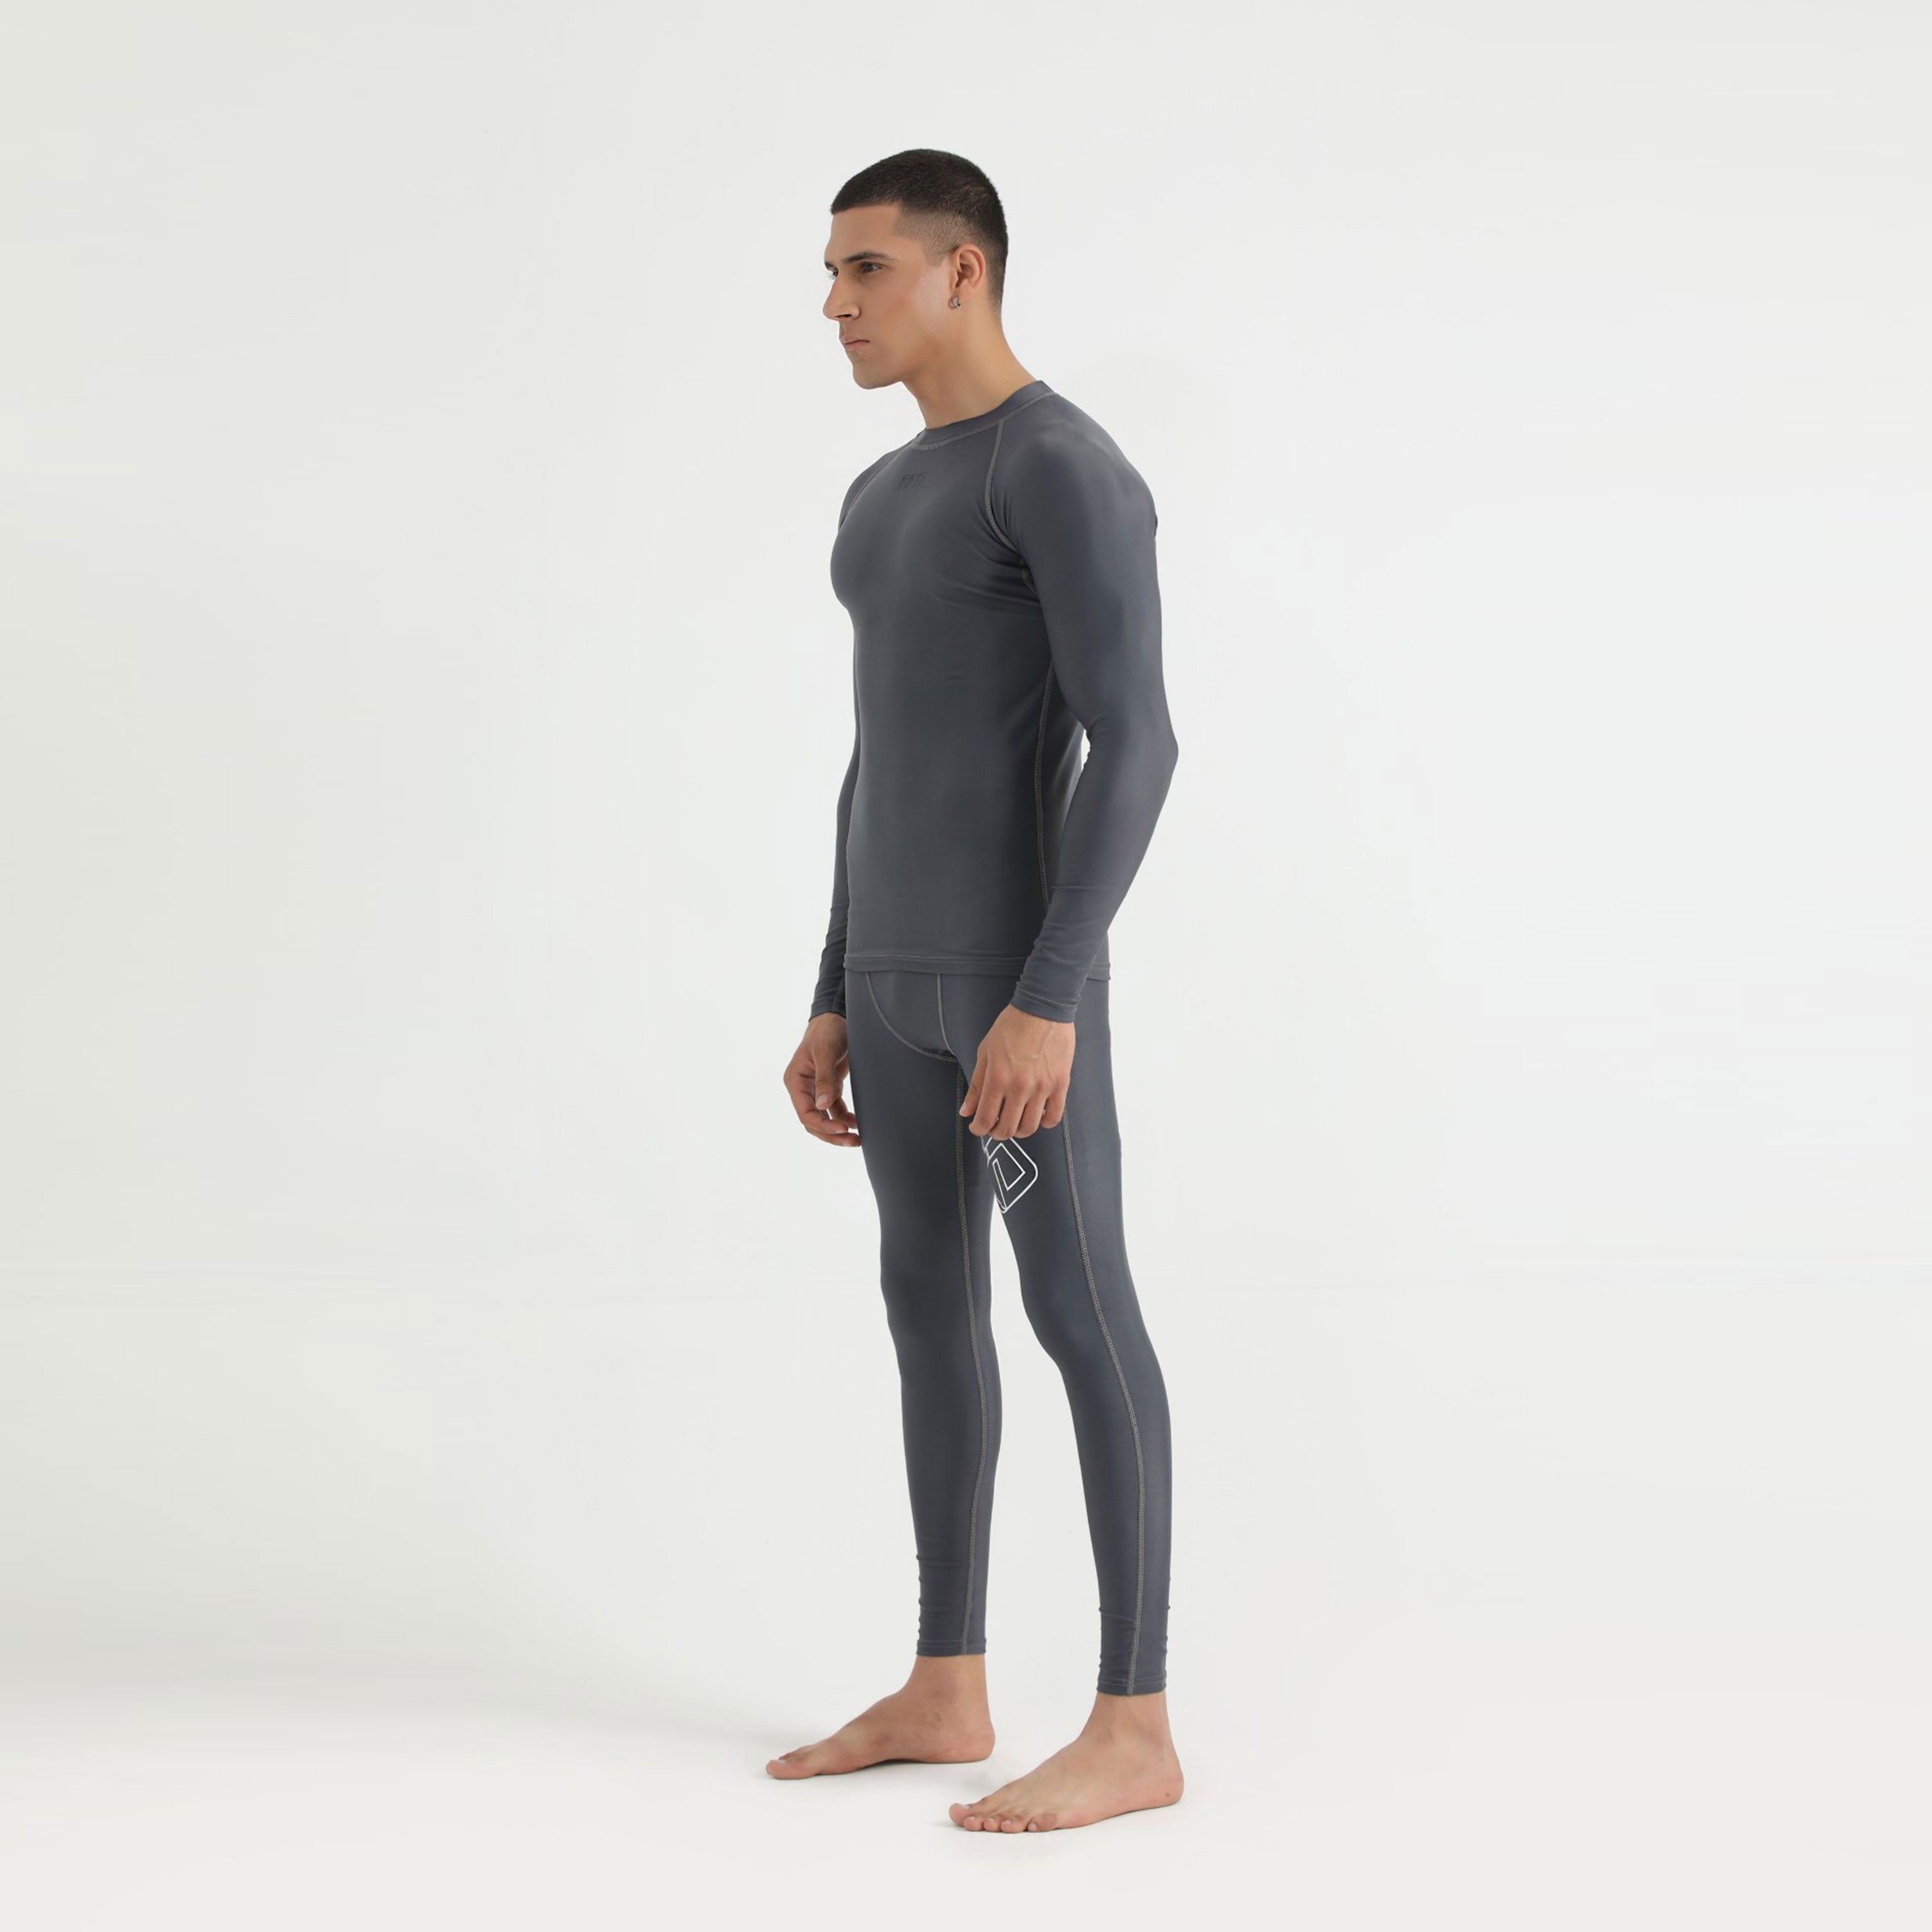 Men's Athletic Base Layer Compression Set - Grey